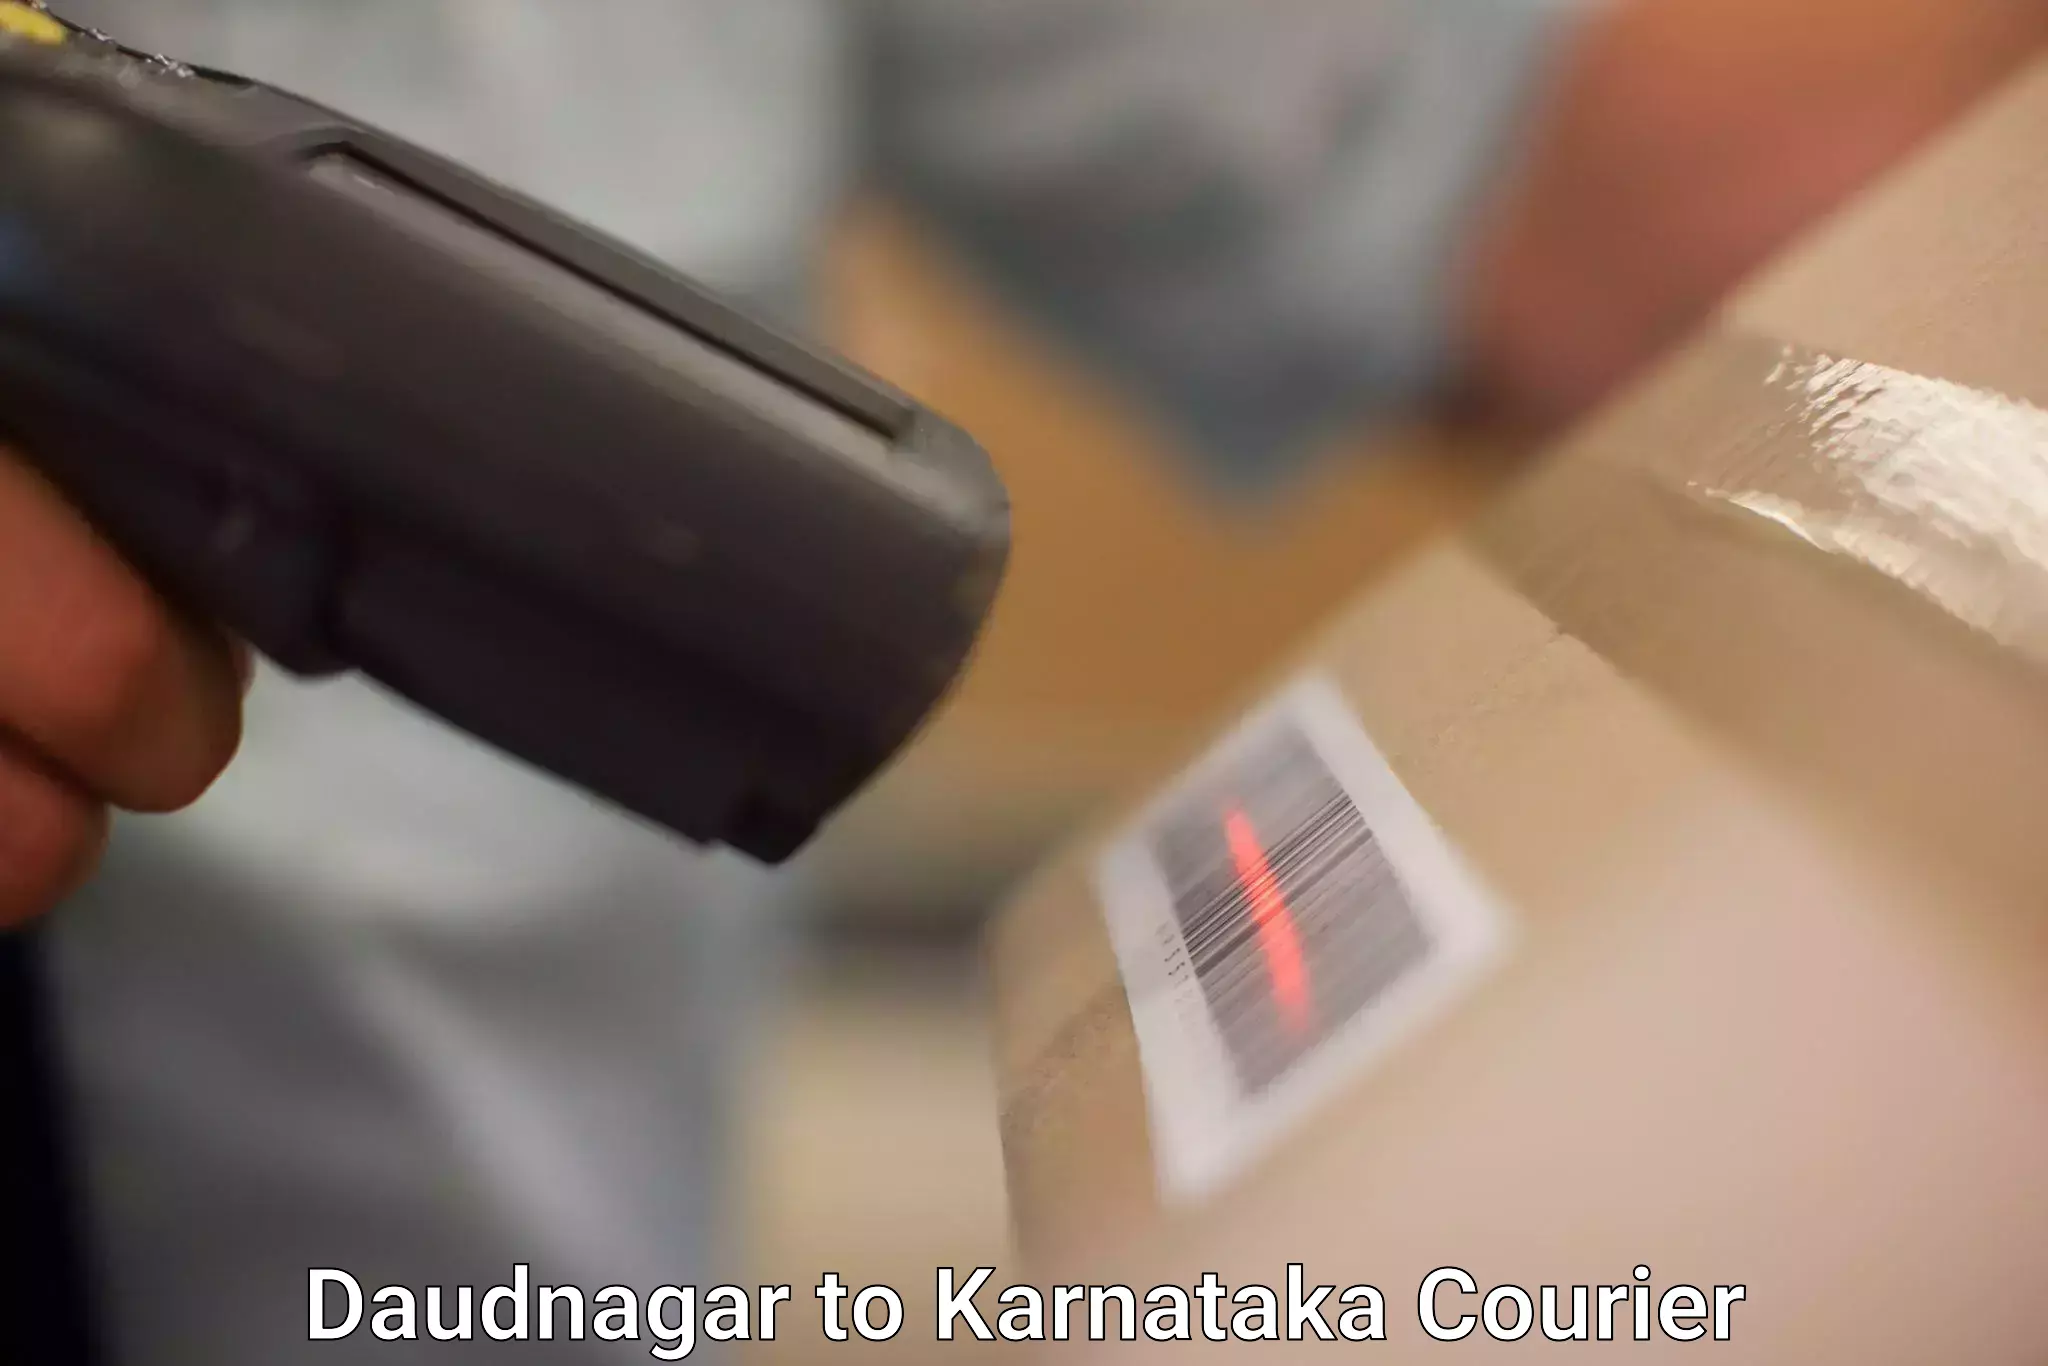 Global courier networks Daudnagar to Karnataka